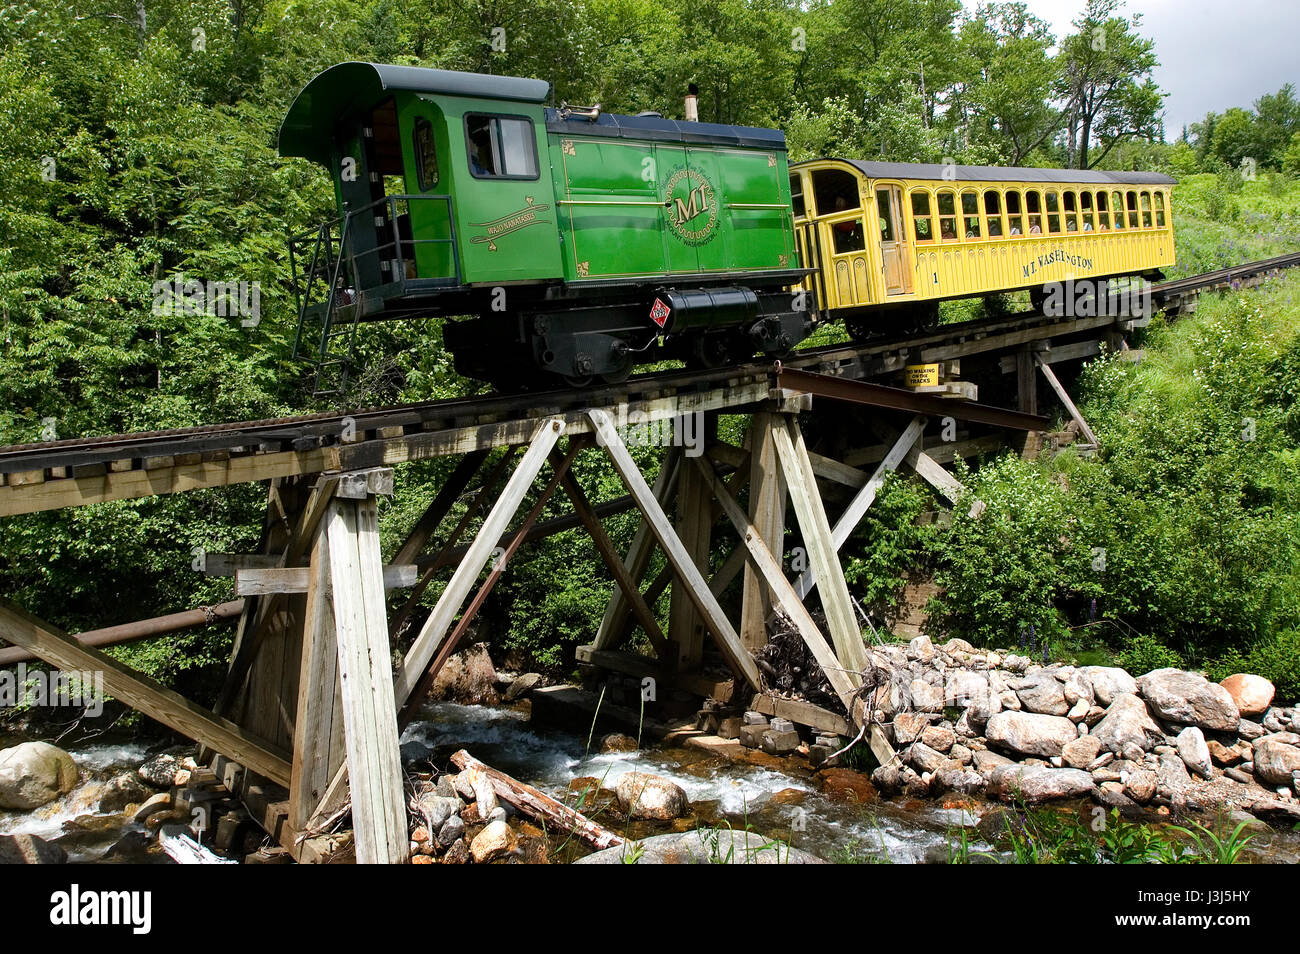 The Cog Railway which climbs Mt. Washington - Mount Washington, New Hampshire, USA Stock Photo